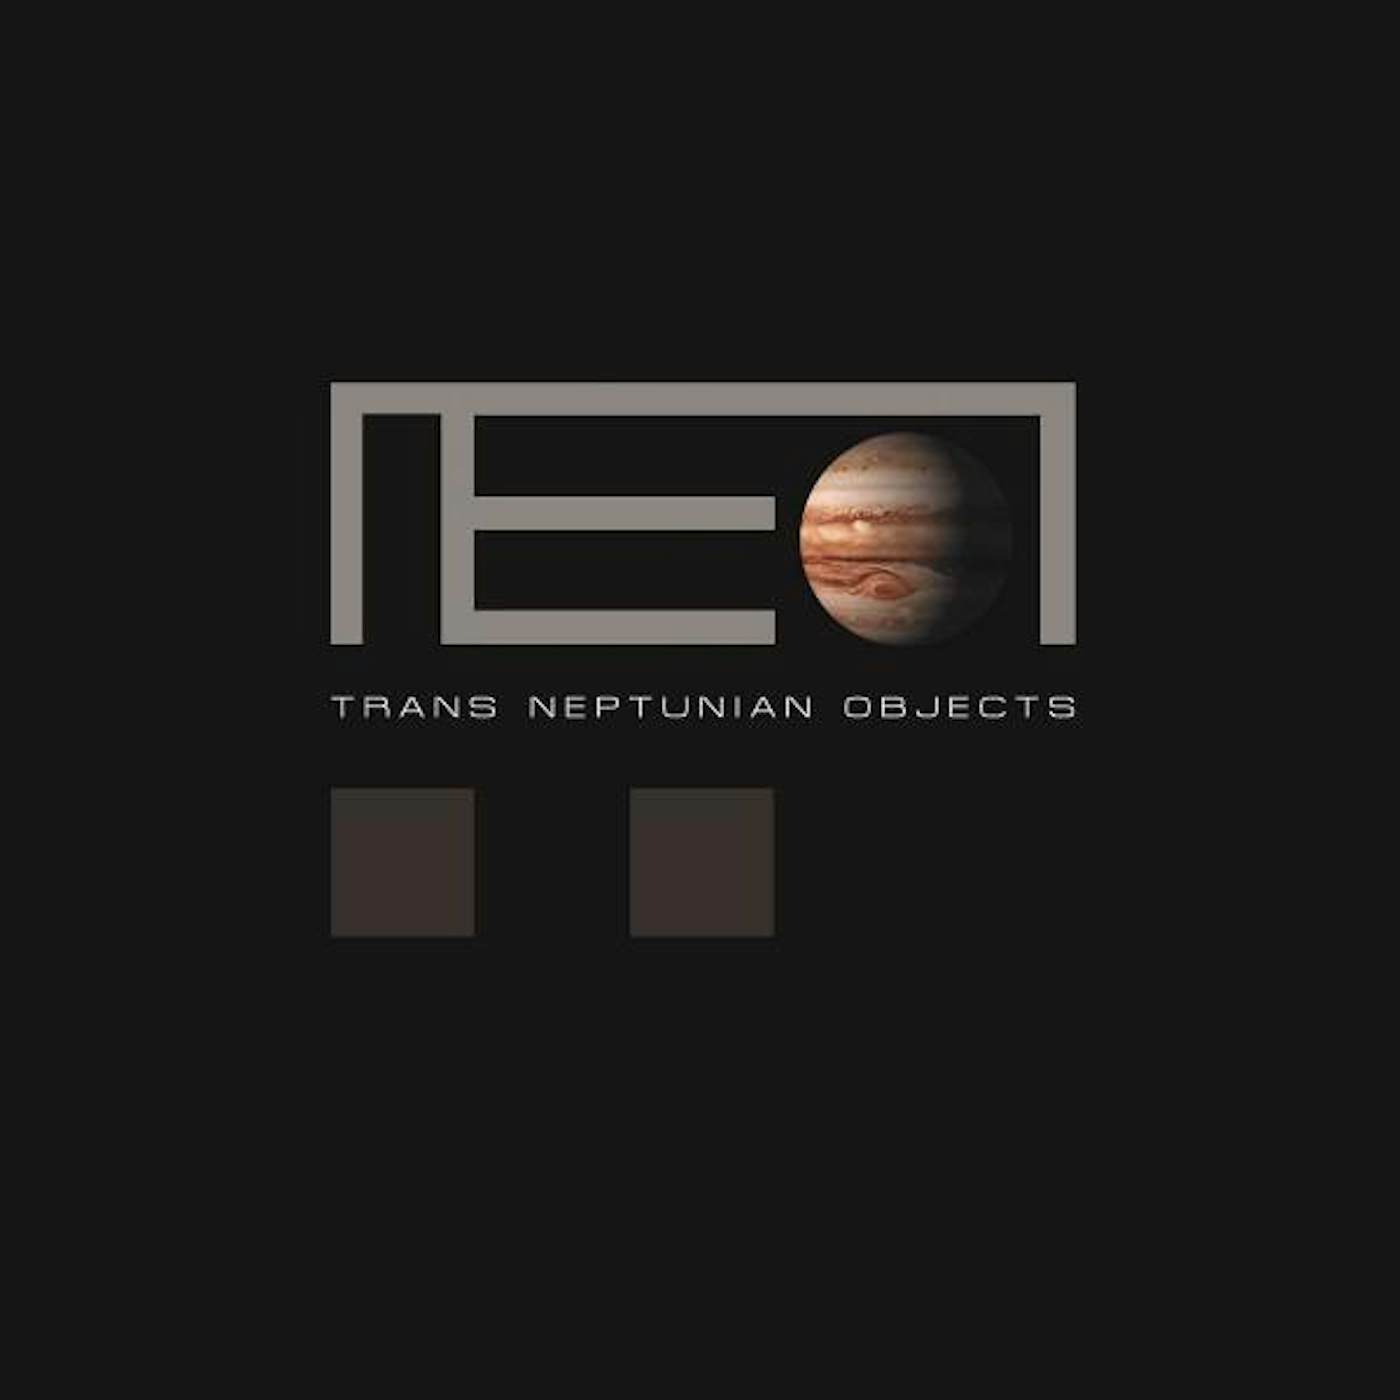 N E O (Near Earth Orbit)